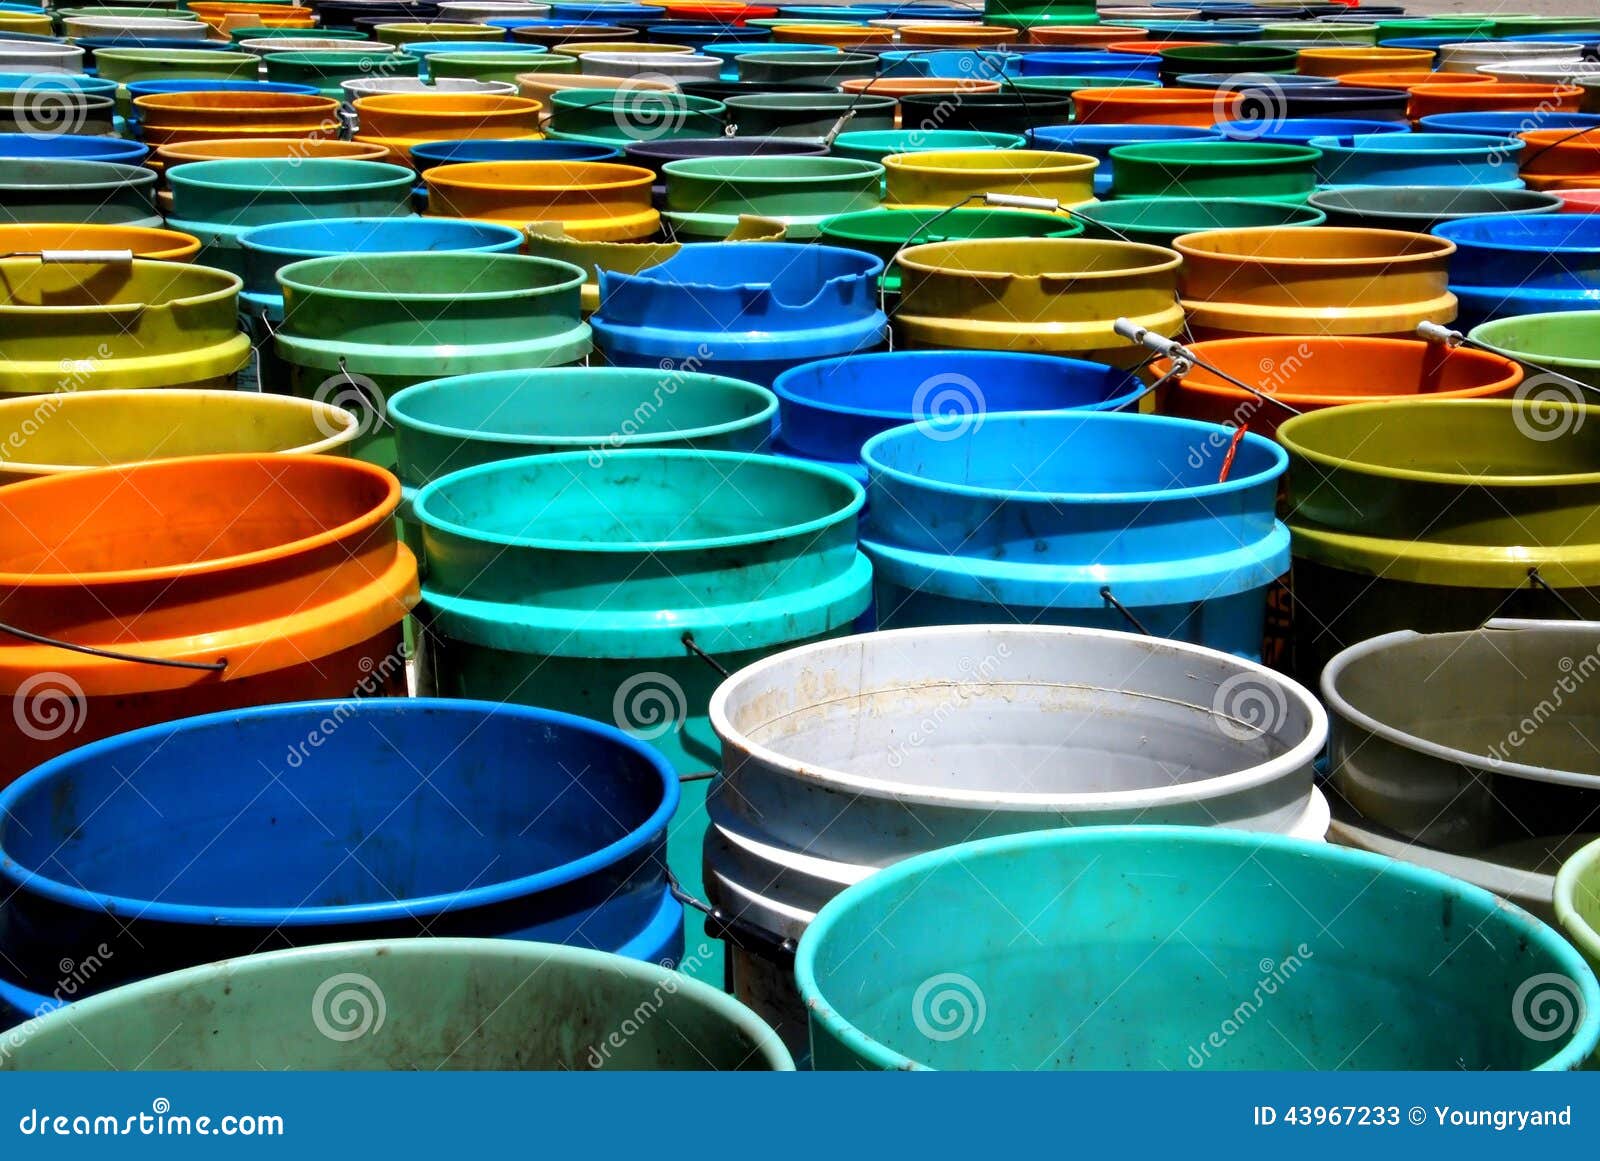 buckets-buckets-more-buckets-bunch-lined-up-parking-lot-owen-park-madison-wisconsin-i-believe-43967233.jpg